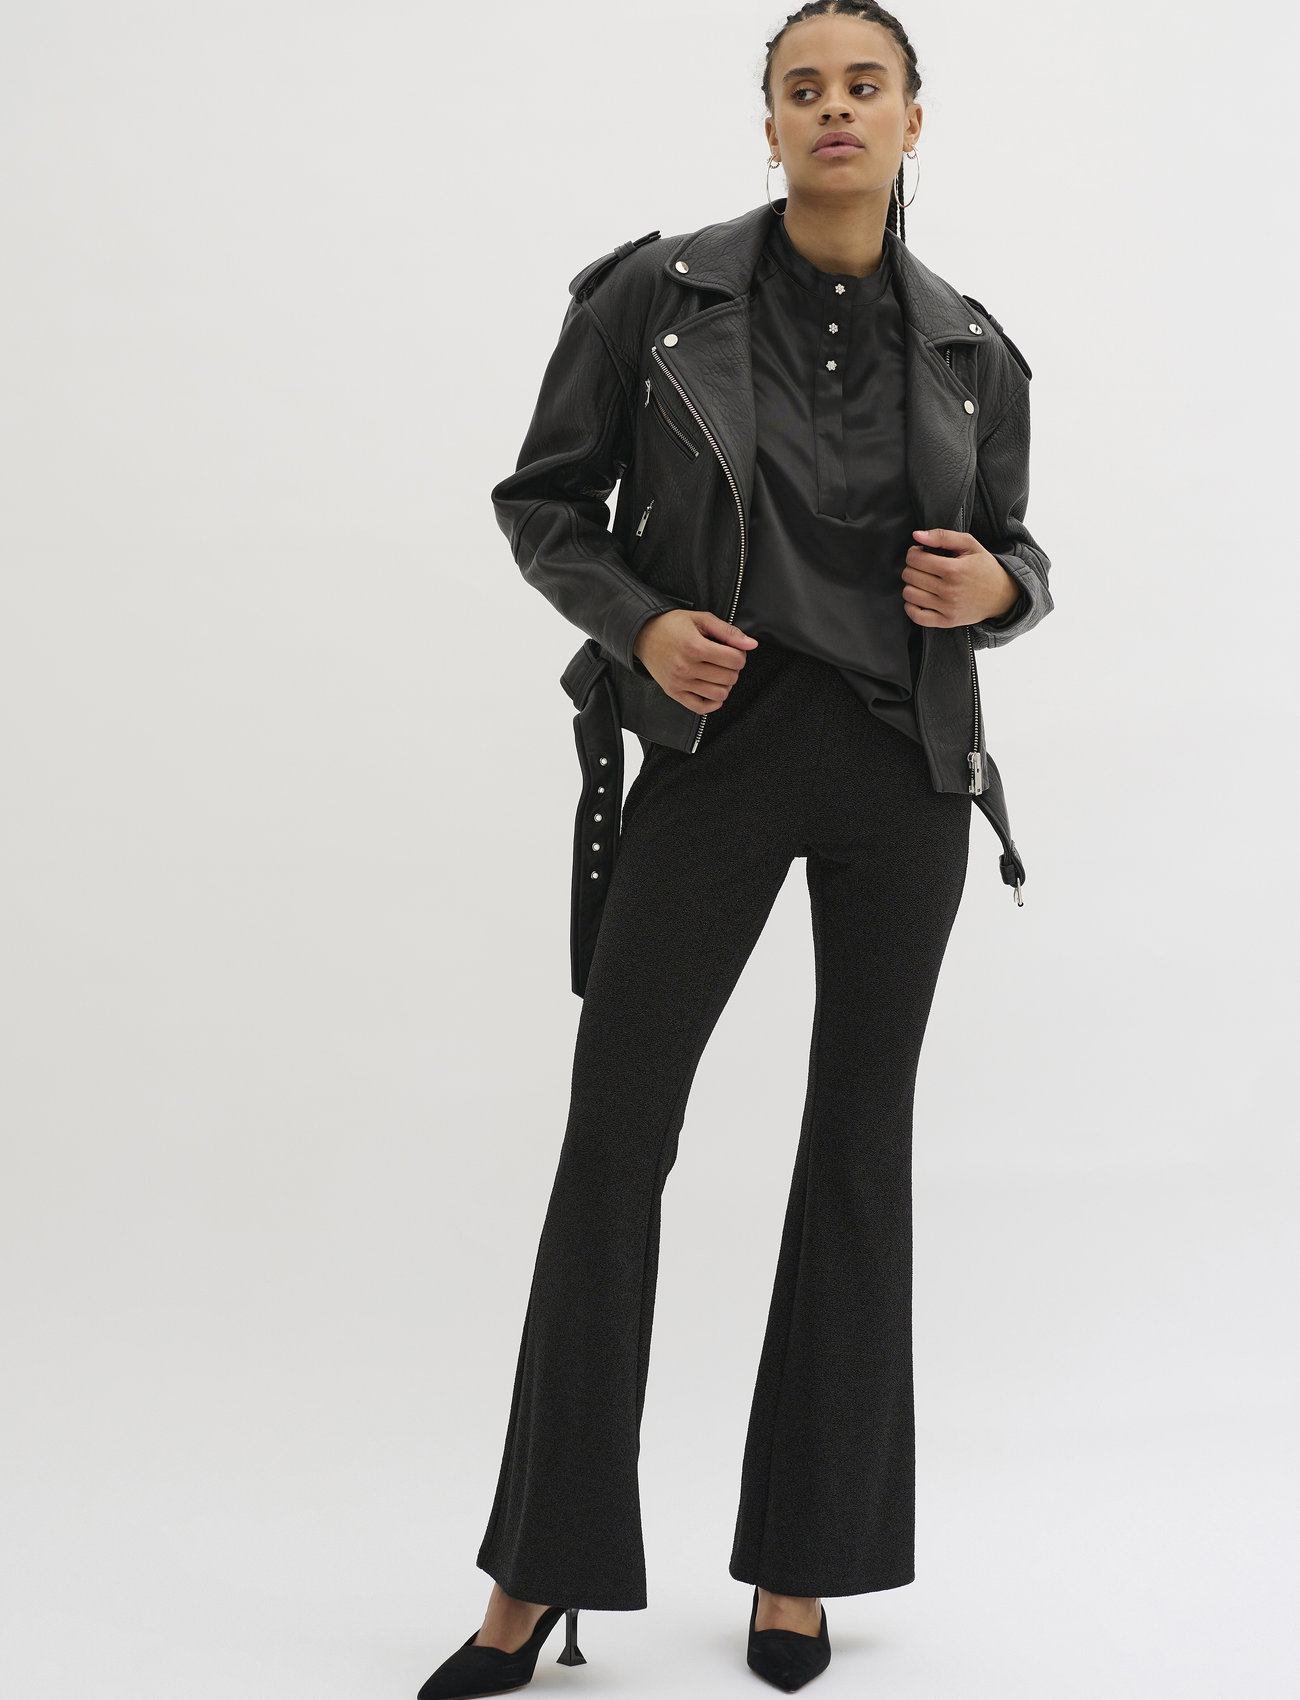 My Essential Wardrobe - SineMW Bootcut Pant - bukser - black w. black glitter - 1